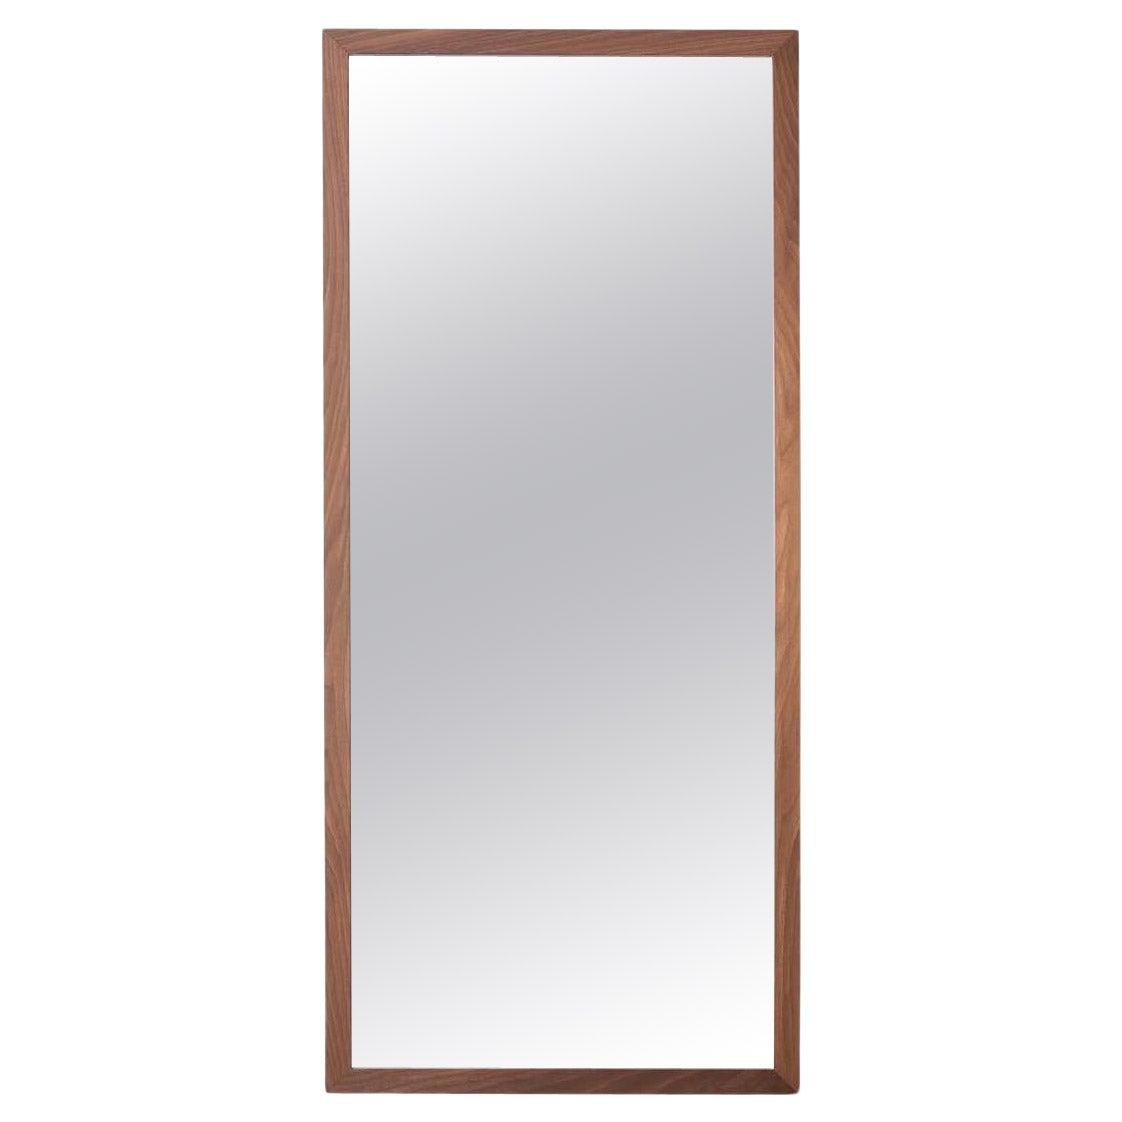 Specchio Rettangolare 2018, miroir rectangulaire en vente